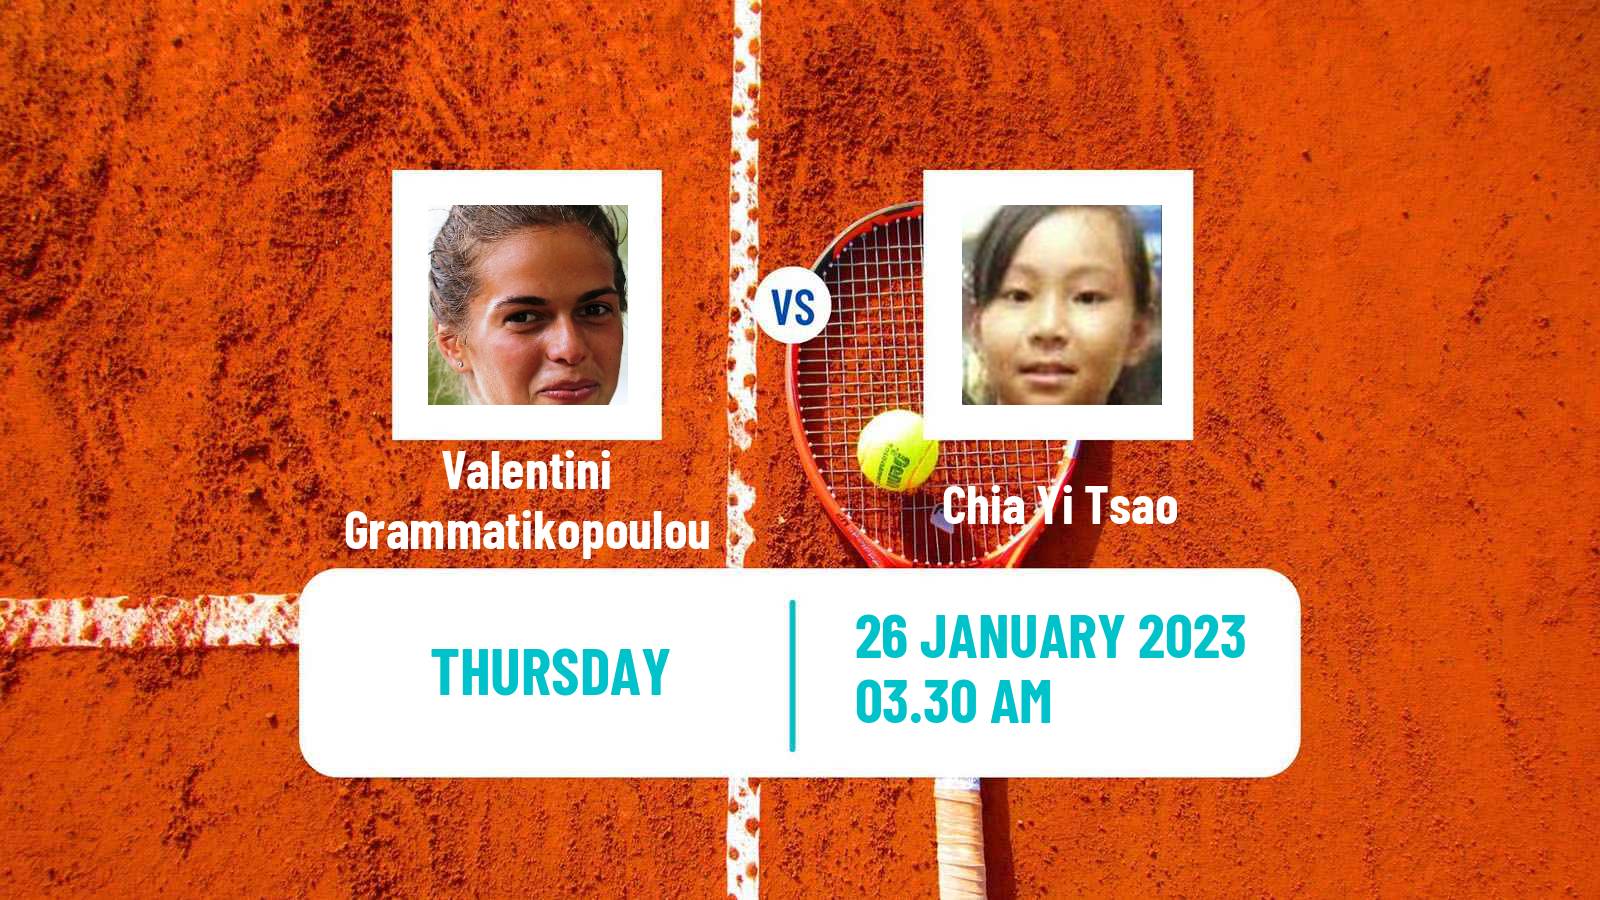 Tennis ITF Tournaments Valentini Grammatikopoulou - Chia Yi Tsao